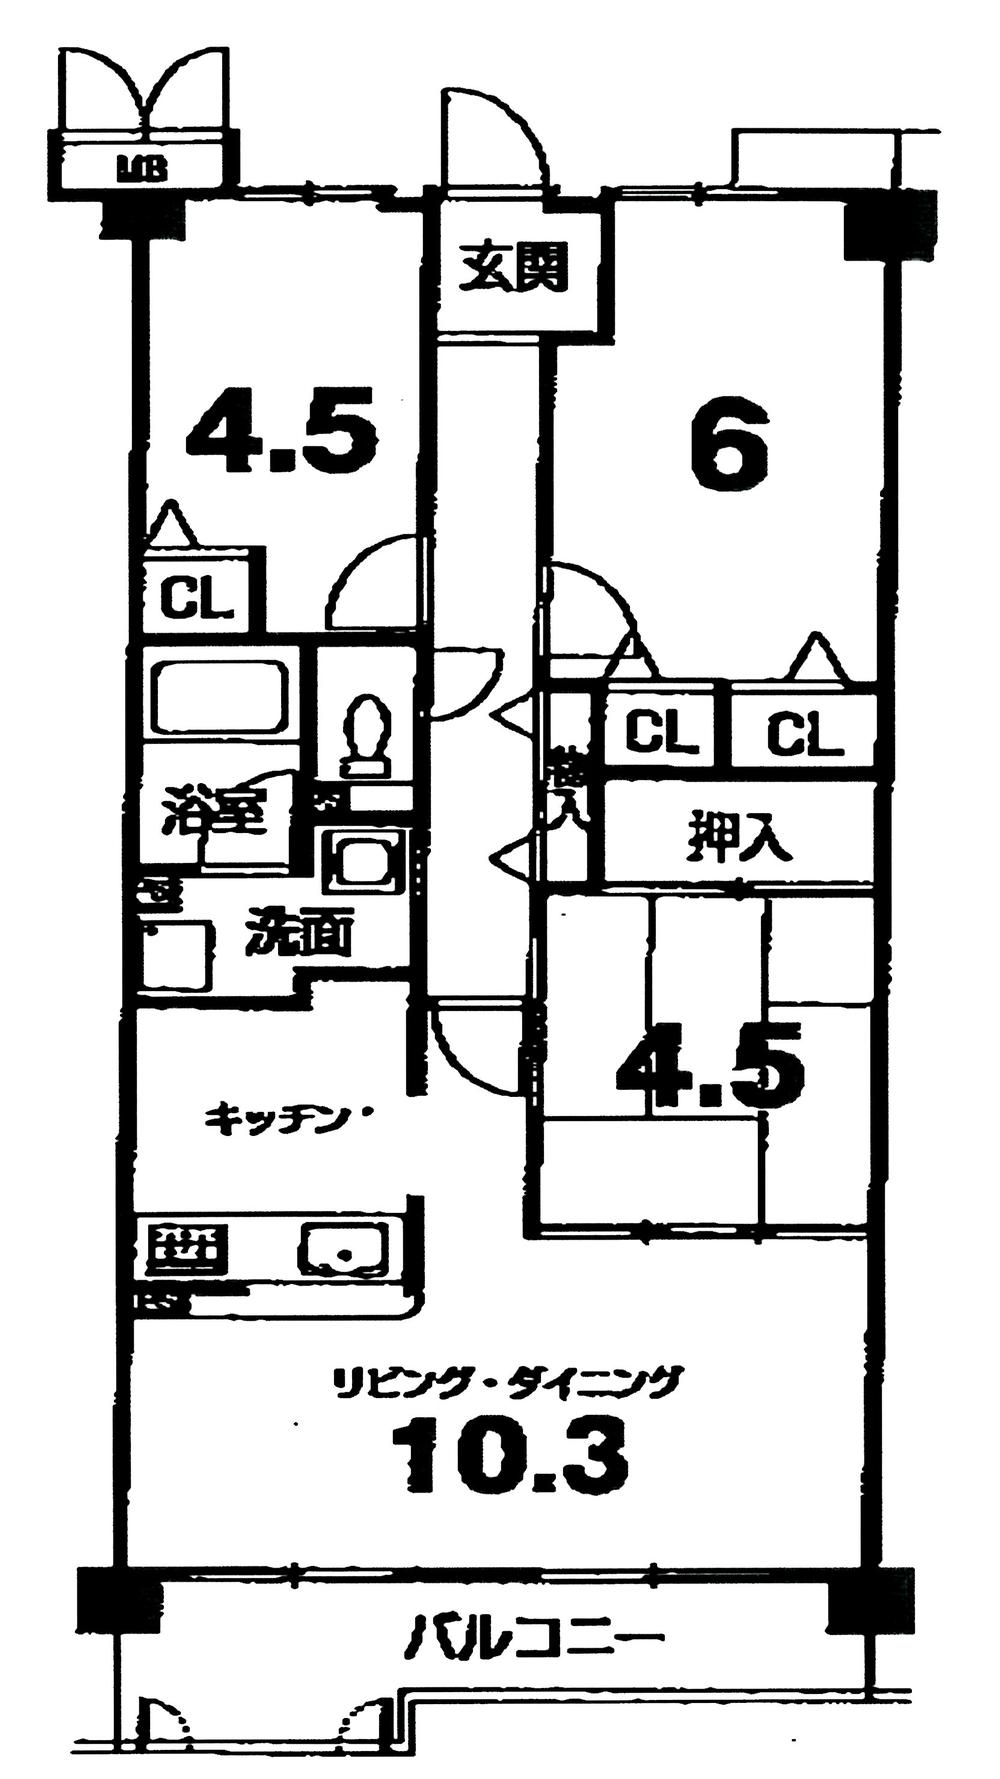 Floor plan. 3LDK, Price 10.8 million yen, Occupied area 61.41 sq m , Balcony area 8.98 sq m